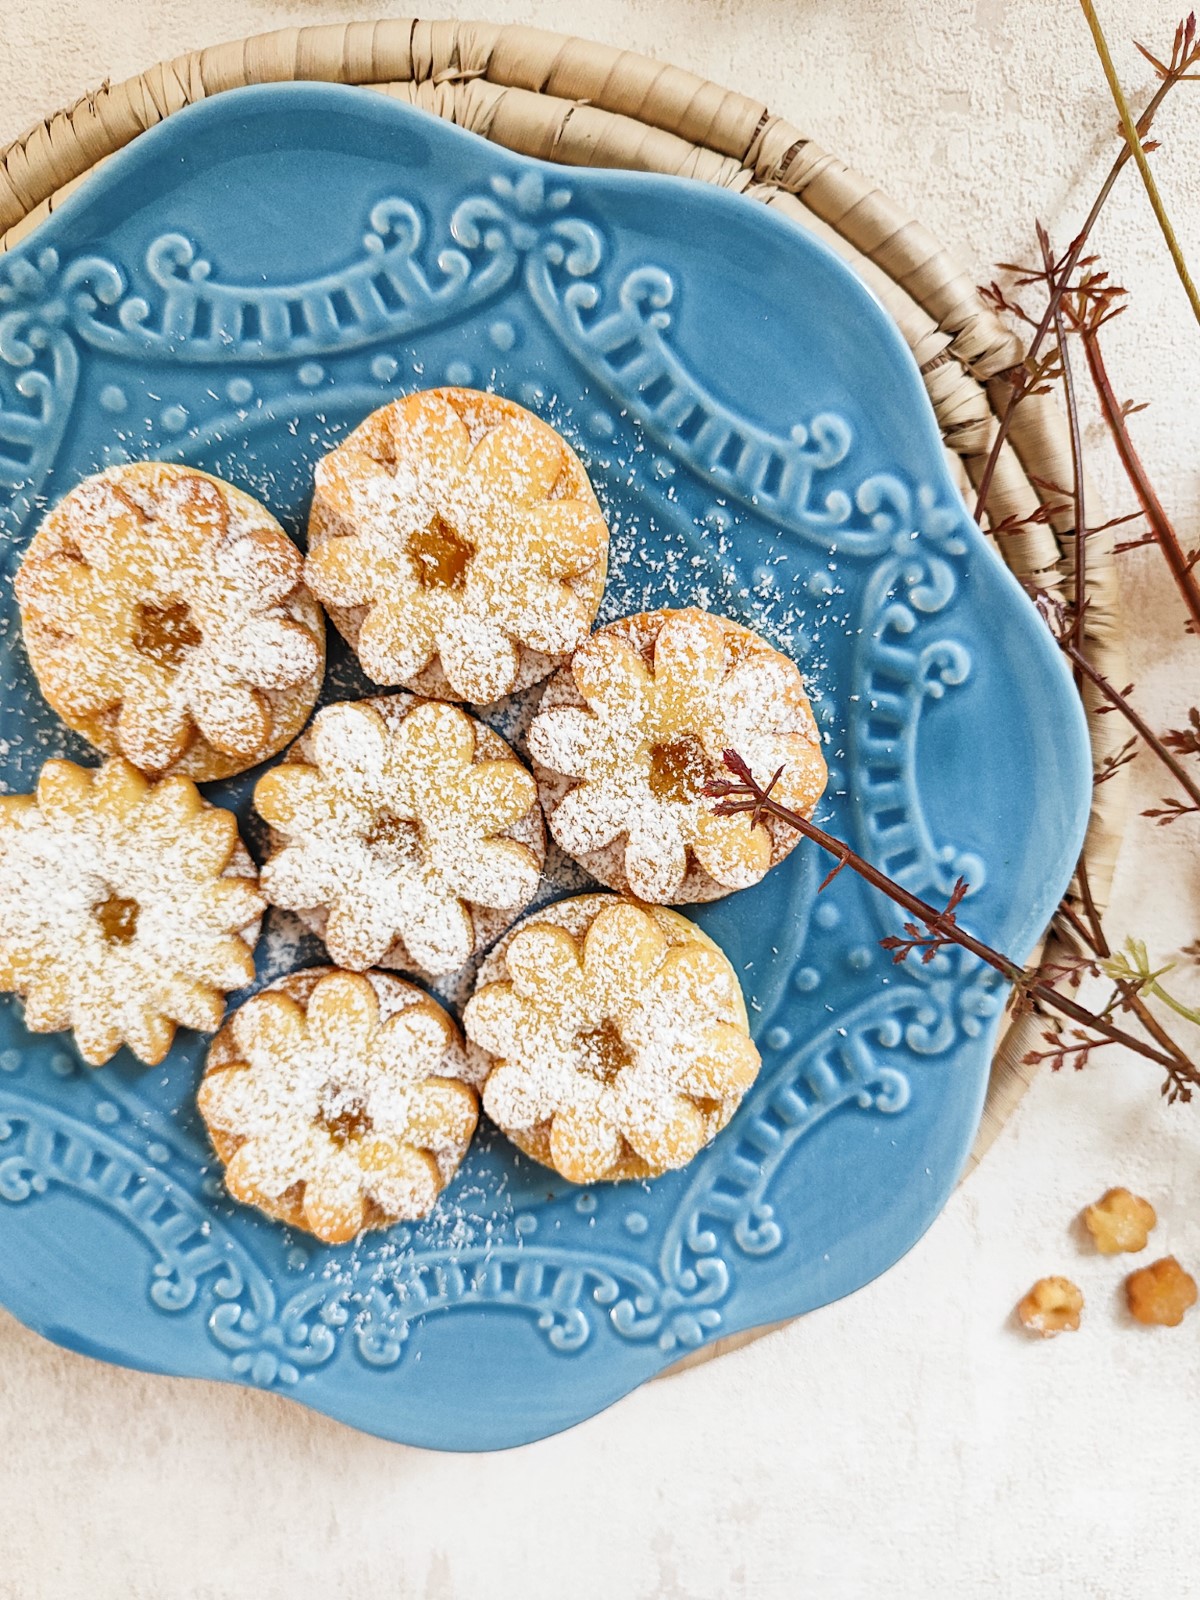 Masleni piškoti z limoninim curdom - Butter cookies with lemon curd